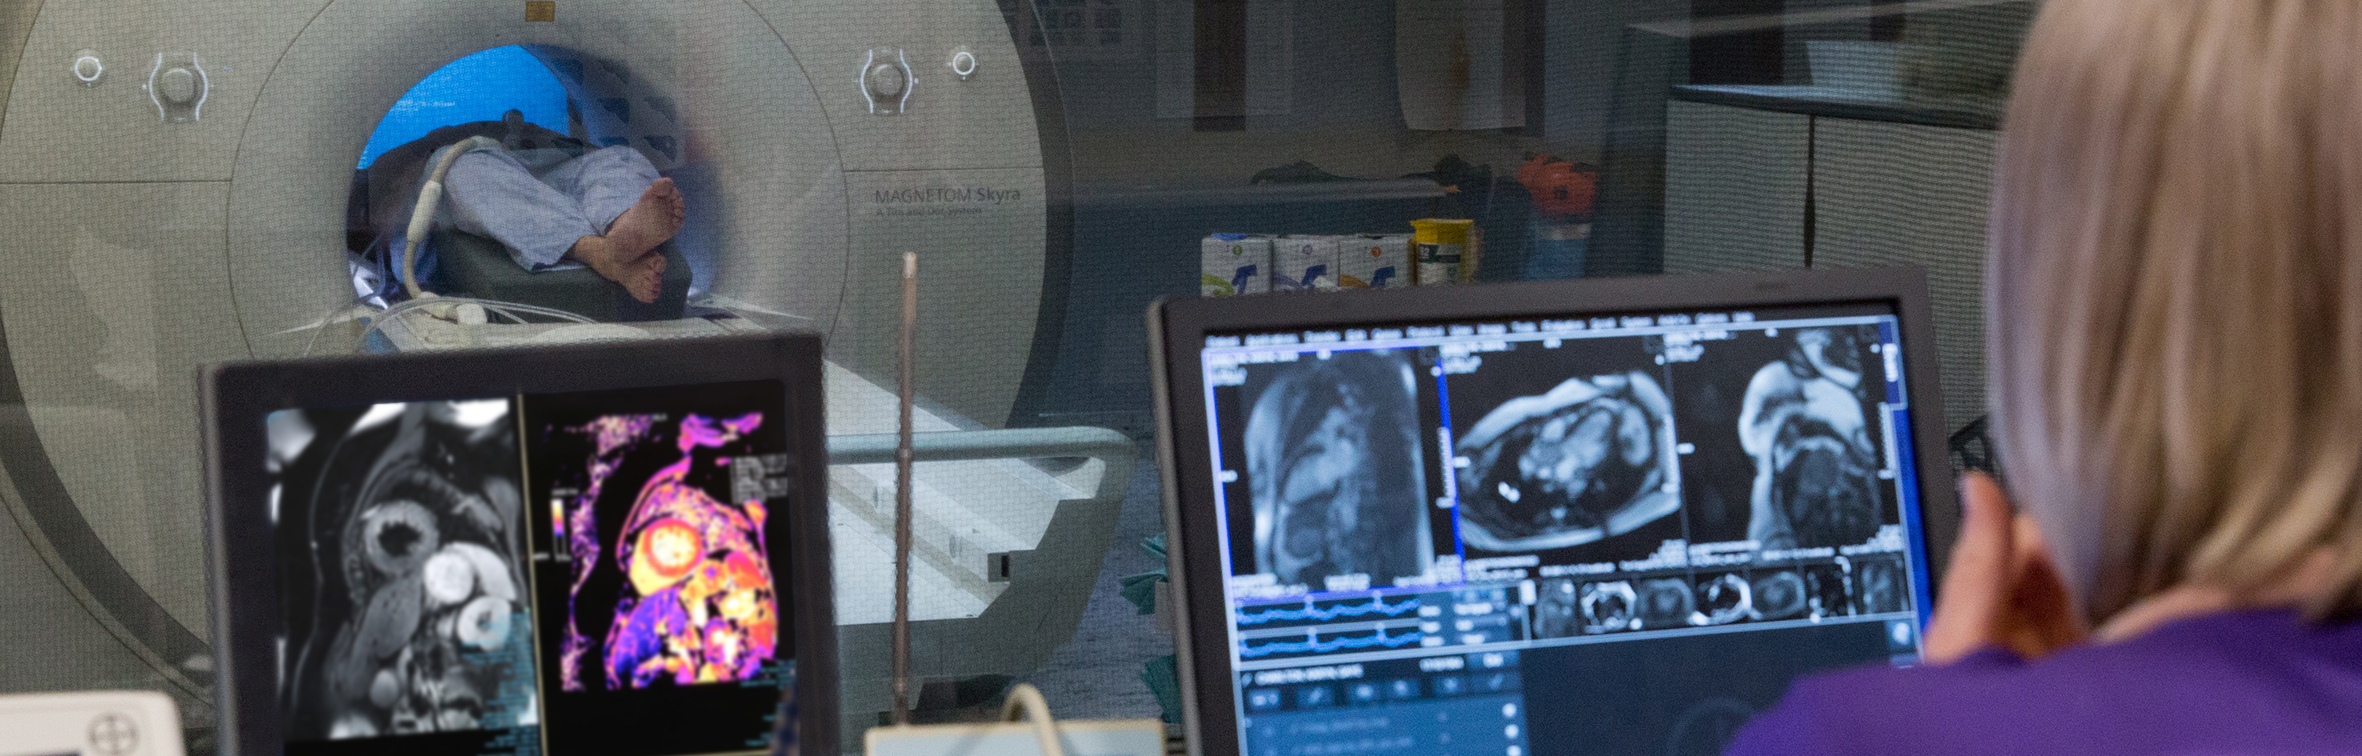 MRI - Magnetic Resonance Imaging - CT - Computed Tomography - Xray - Ultrasound - Digital X-rays